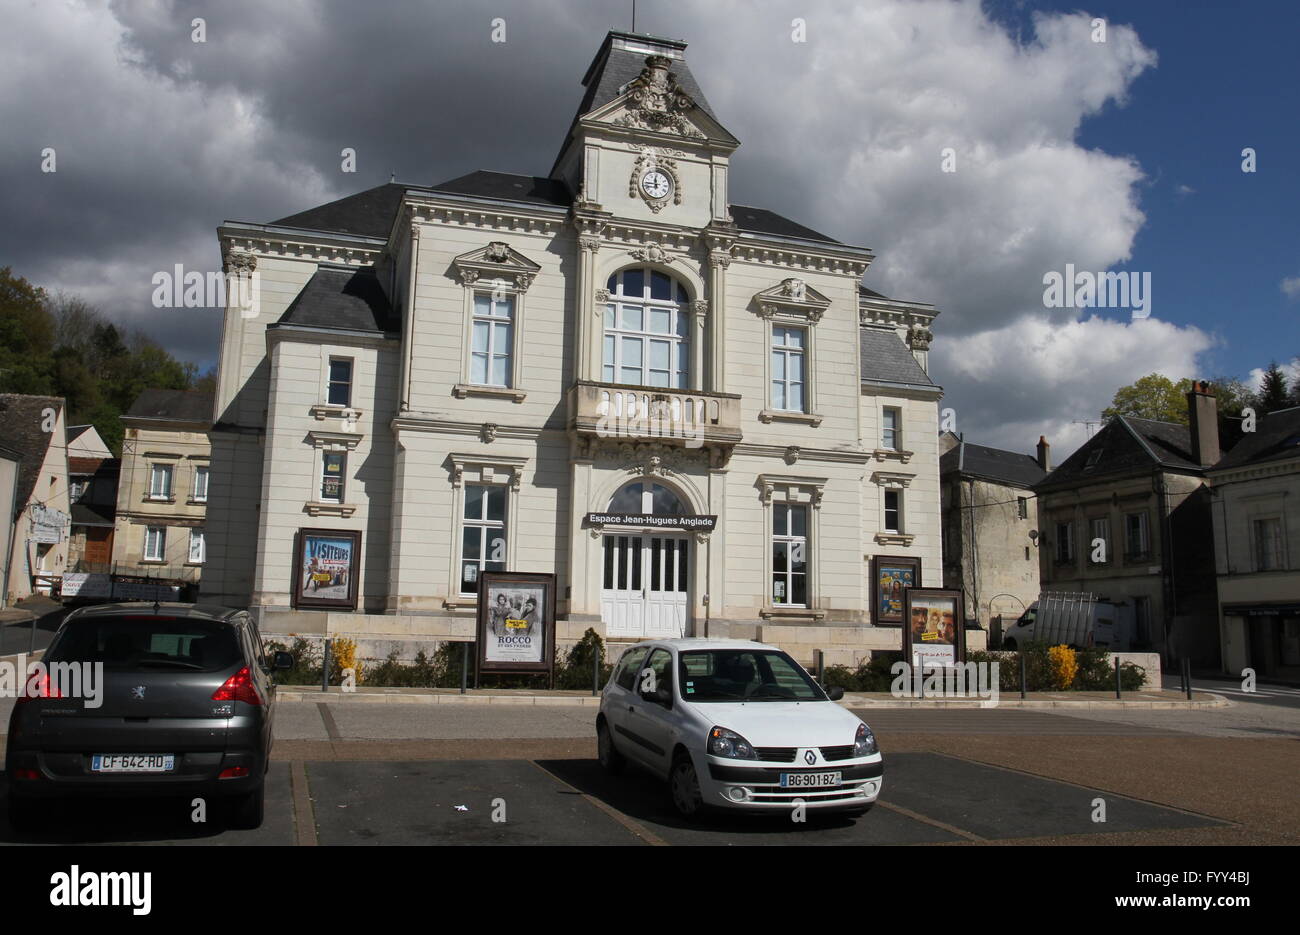 Exterior of Espace Jean-Hugues Anglade cinema Langeais France  April 2016 Stock Photo